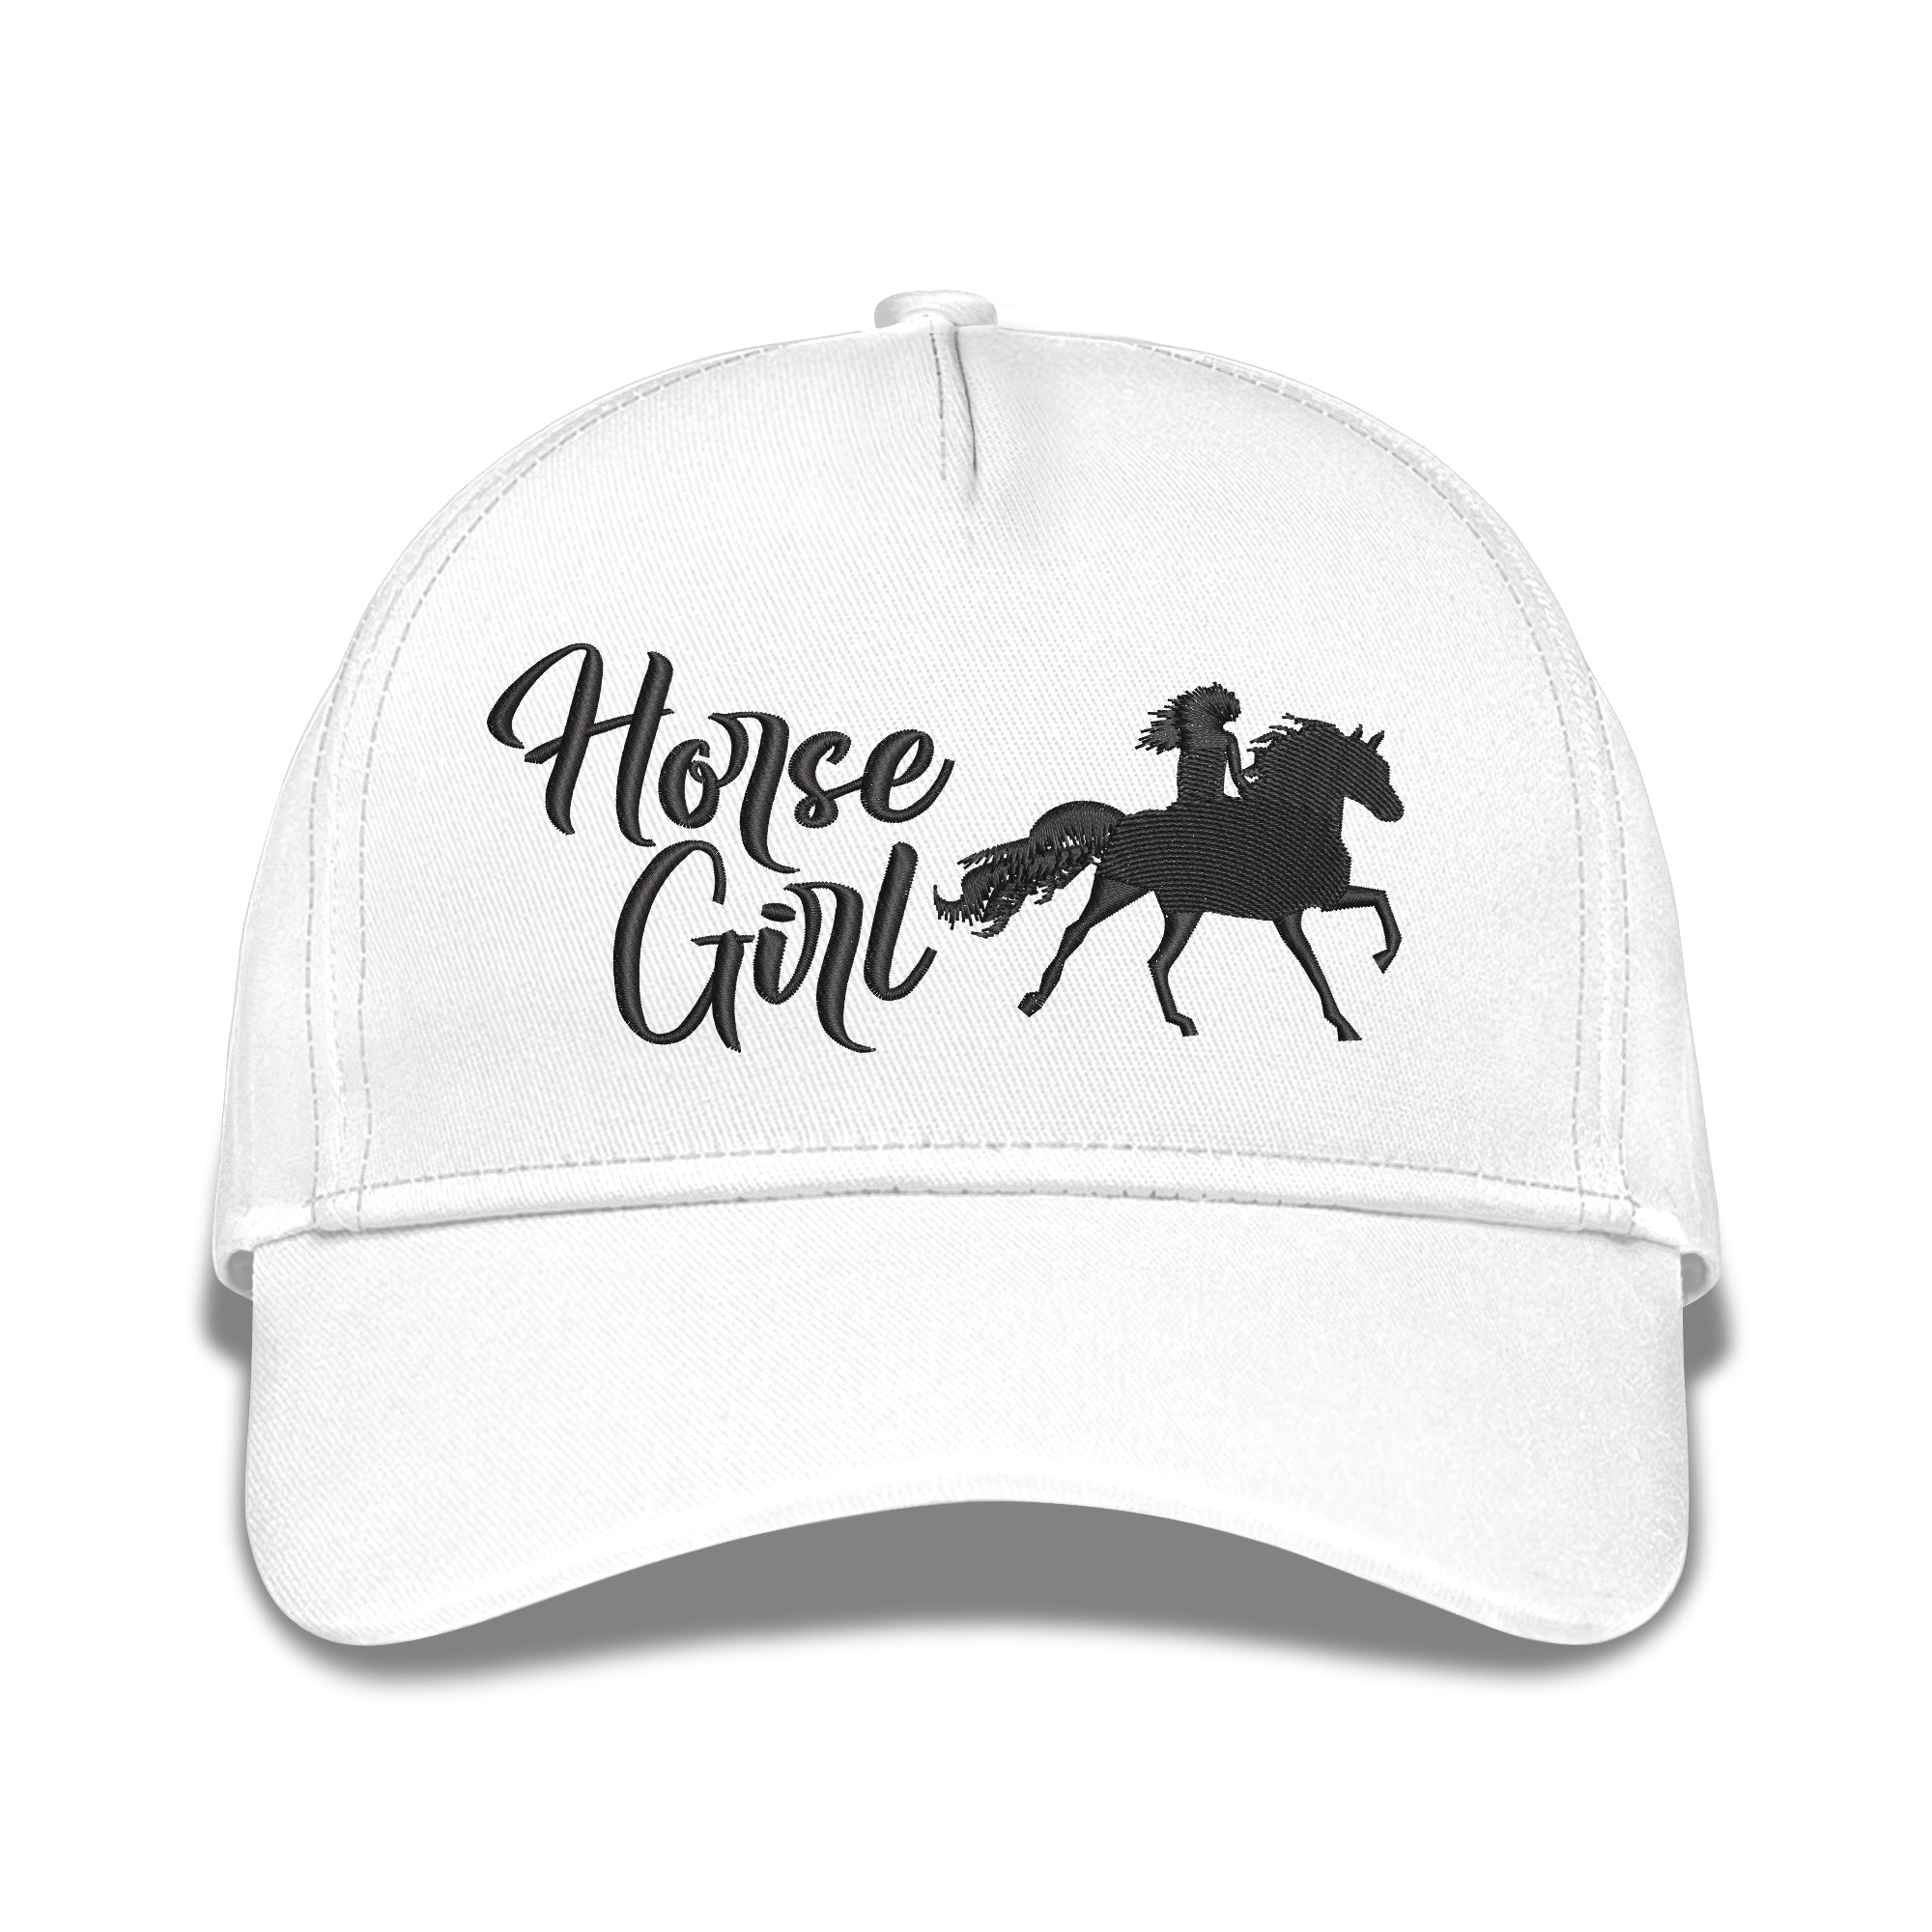 Horses Girl Embroidered Baseball Caps